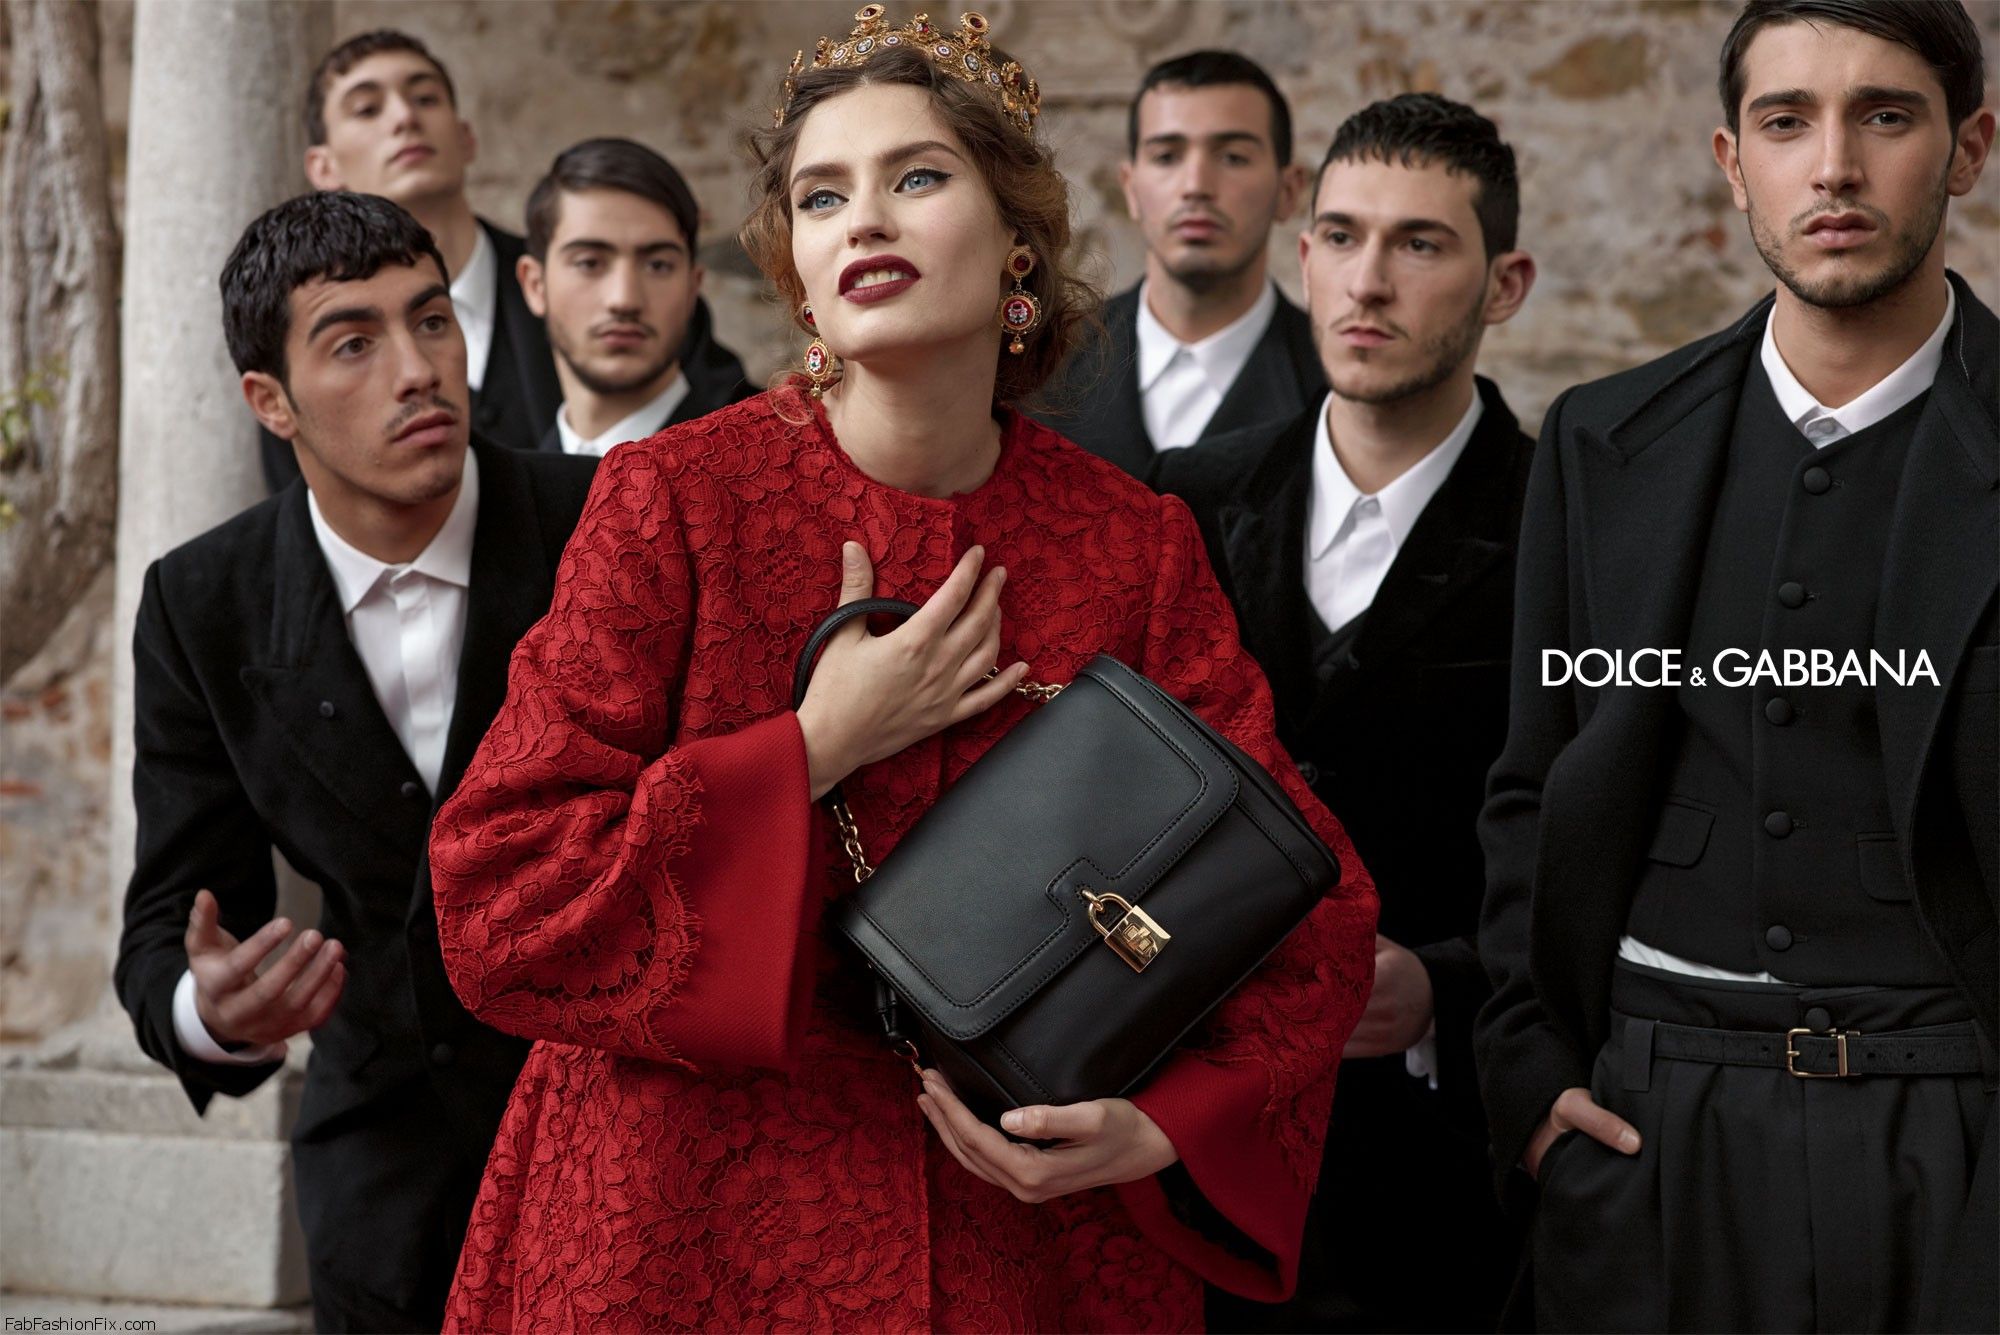 Dolce & Gabbana Fall/Winter 2013 campaign | Fab Fashion Fix